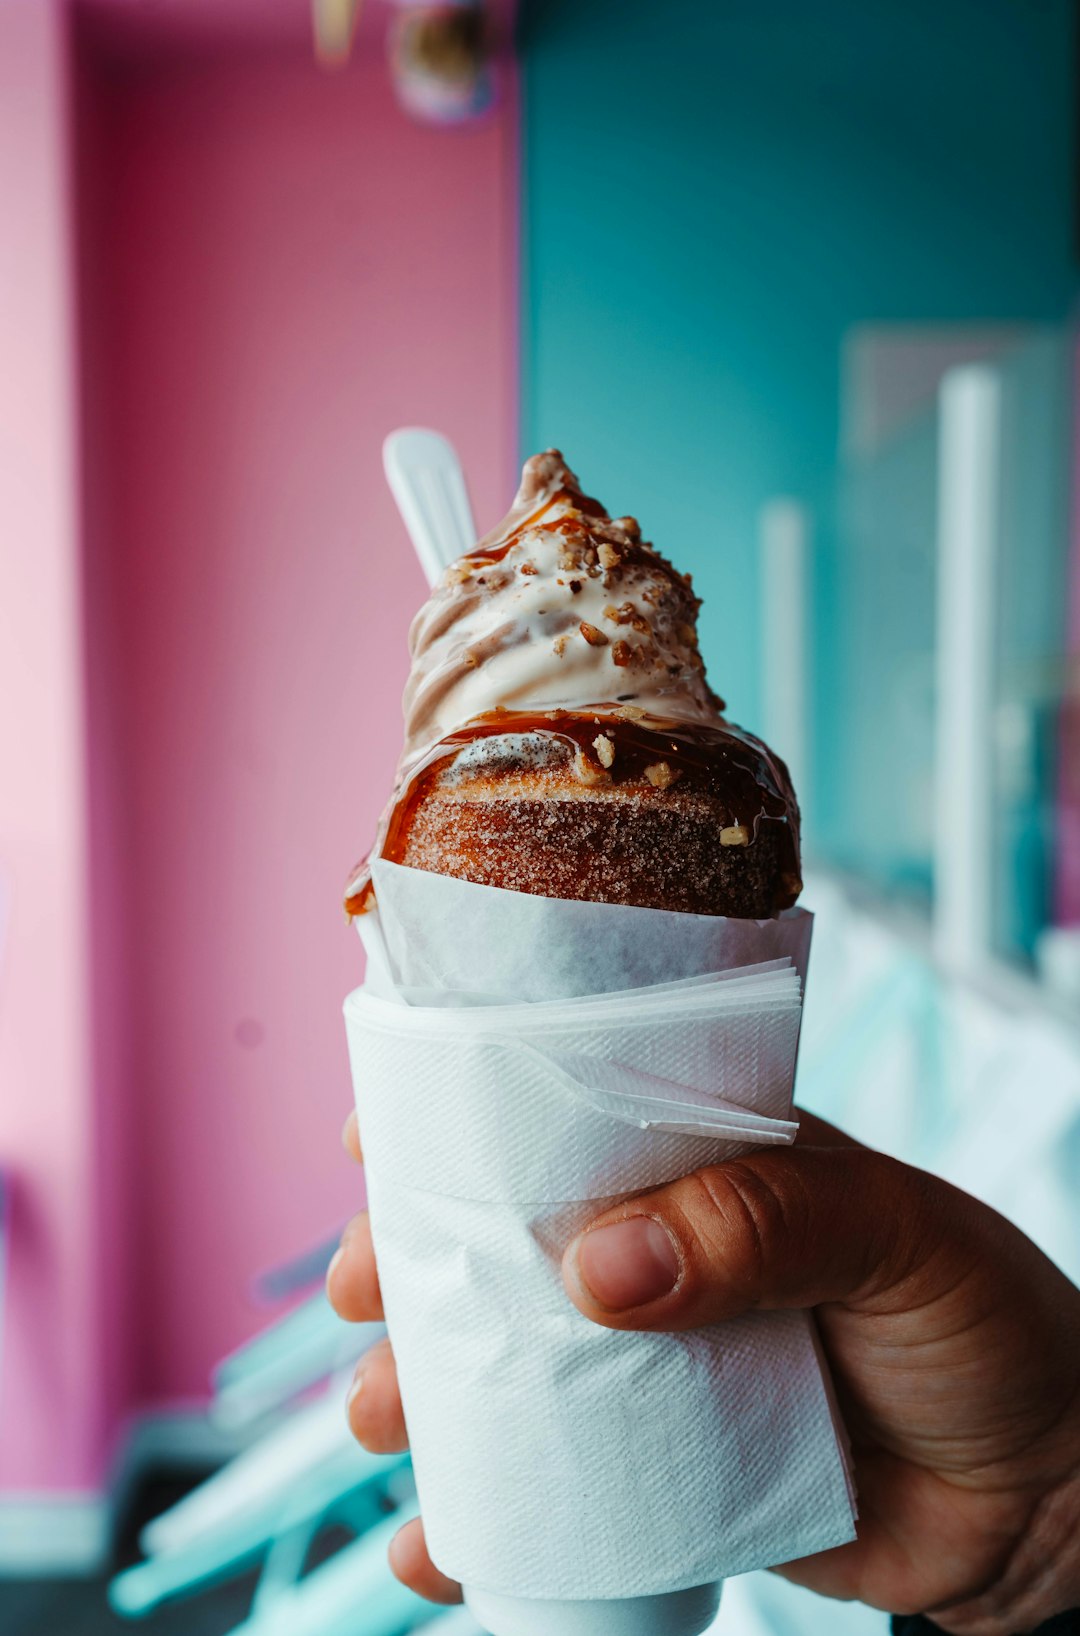 person holding ice cream cone with chocolate ice cream